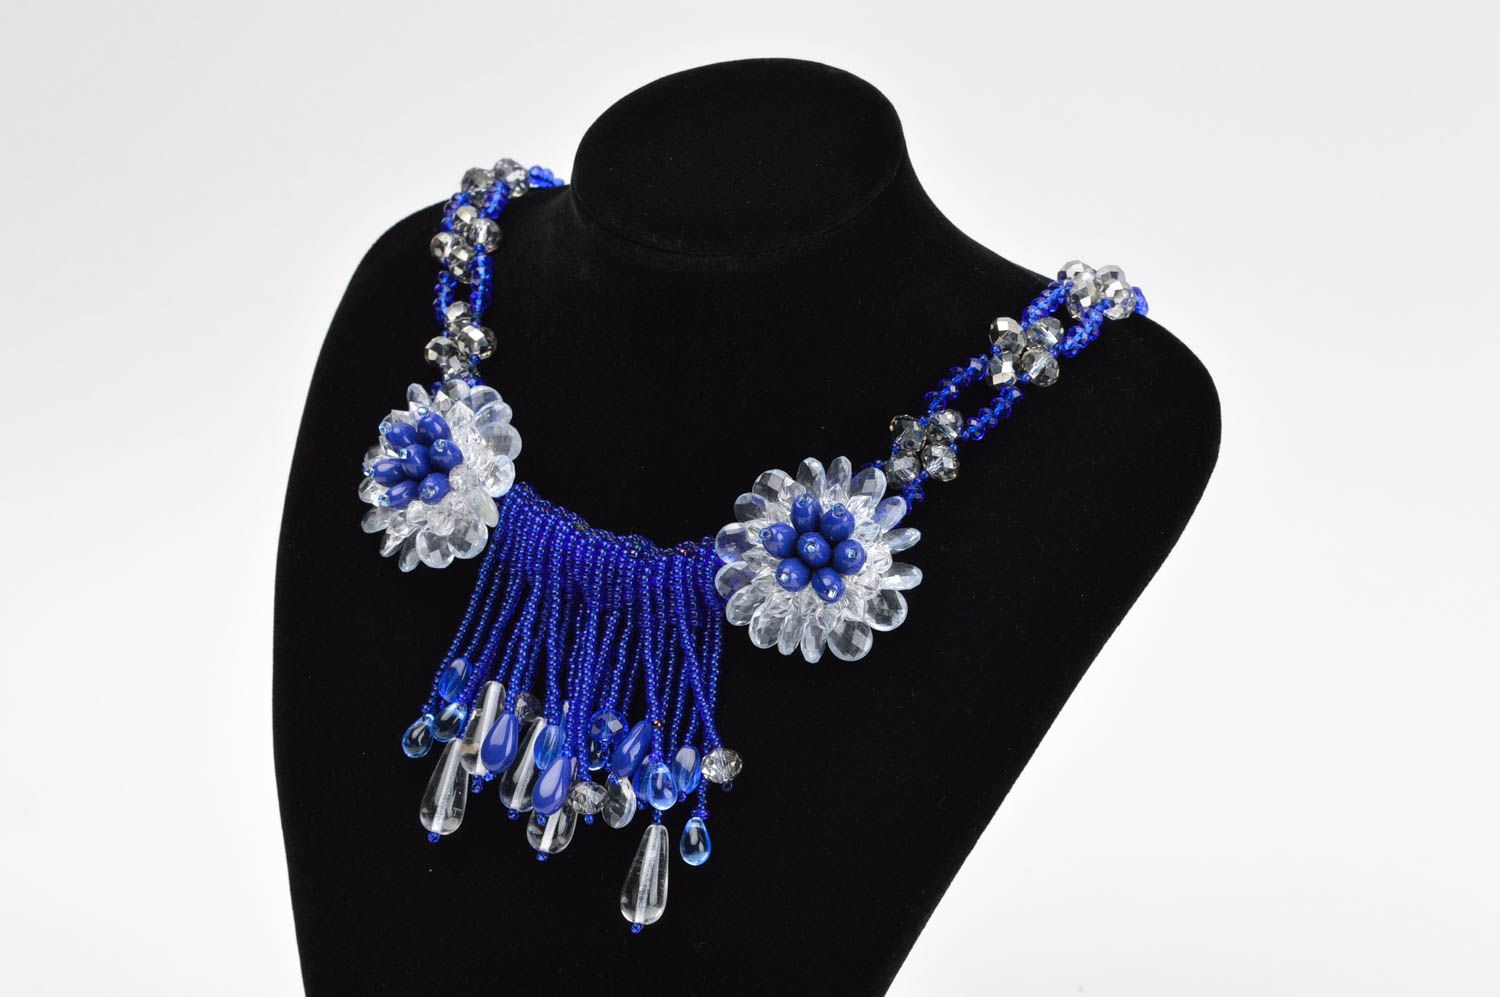 Handmade beads necklace handmade accessories jewelry of beads beads bijouterie photo 1